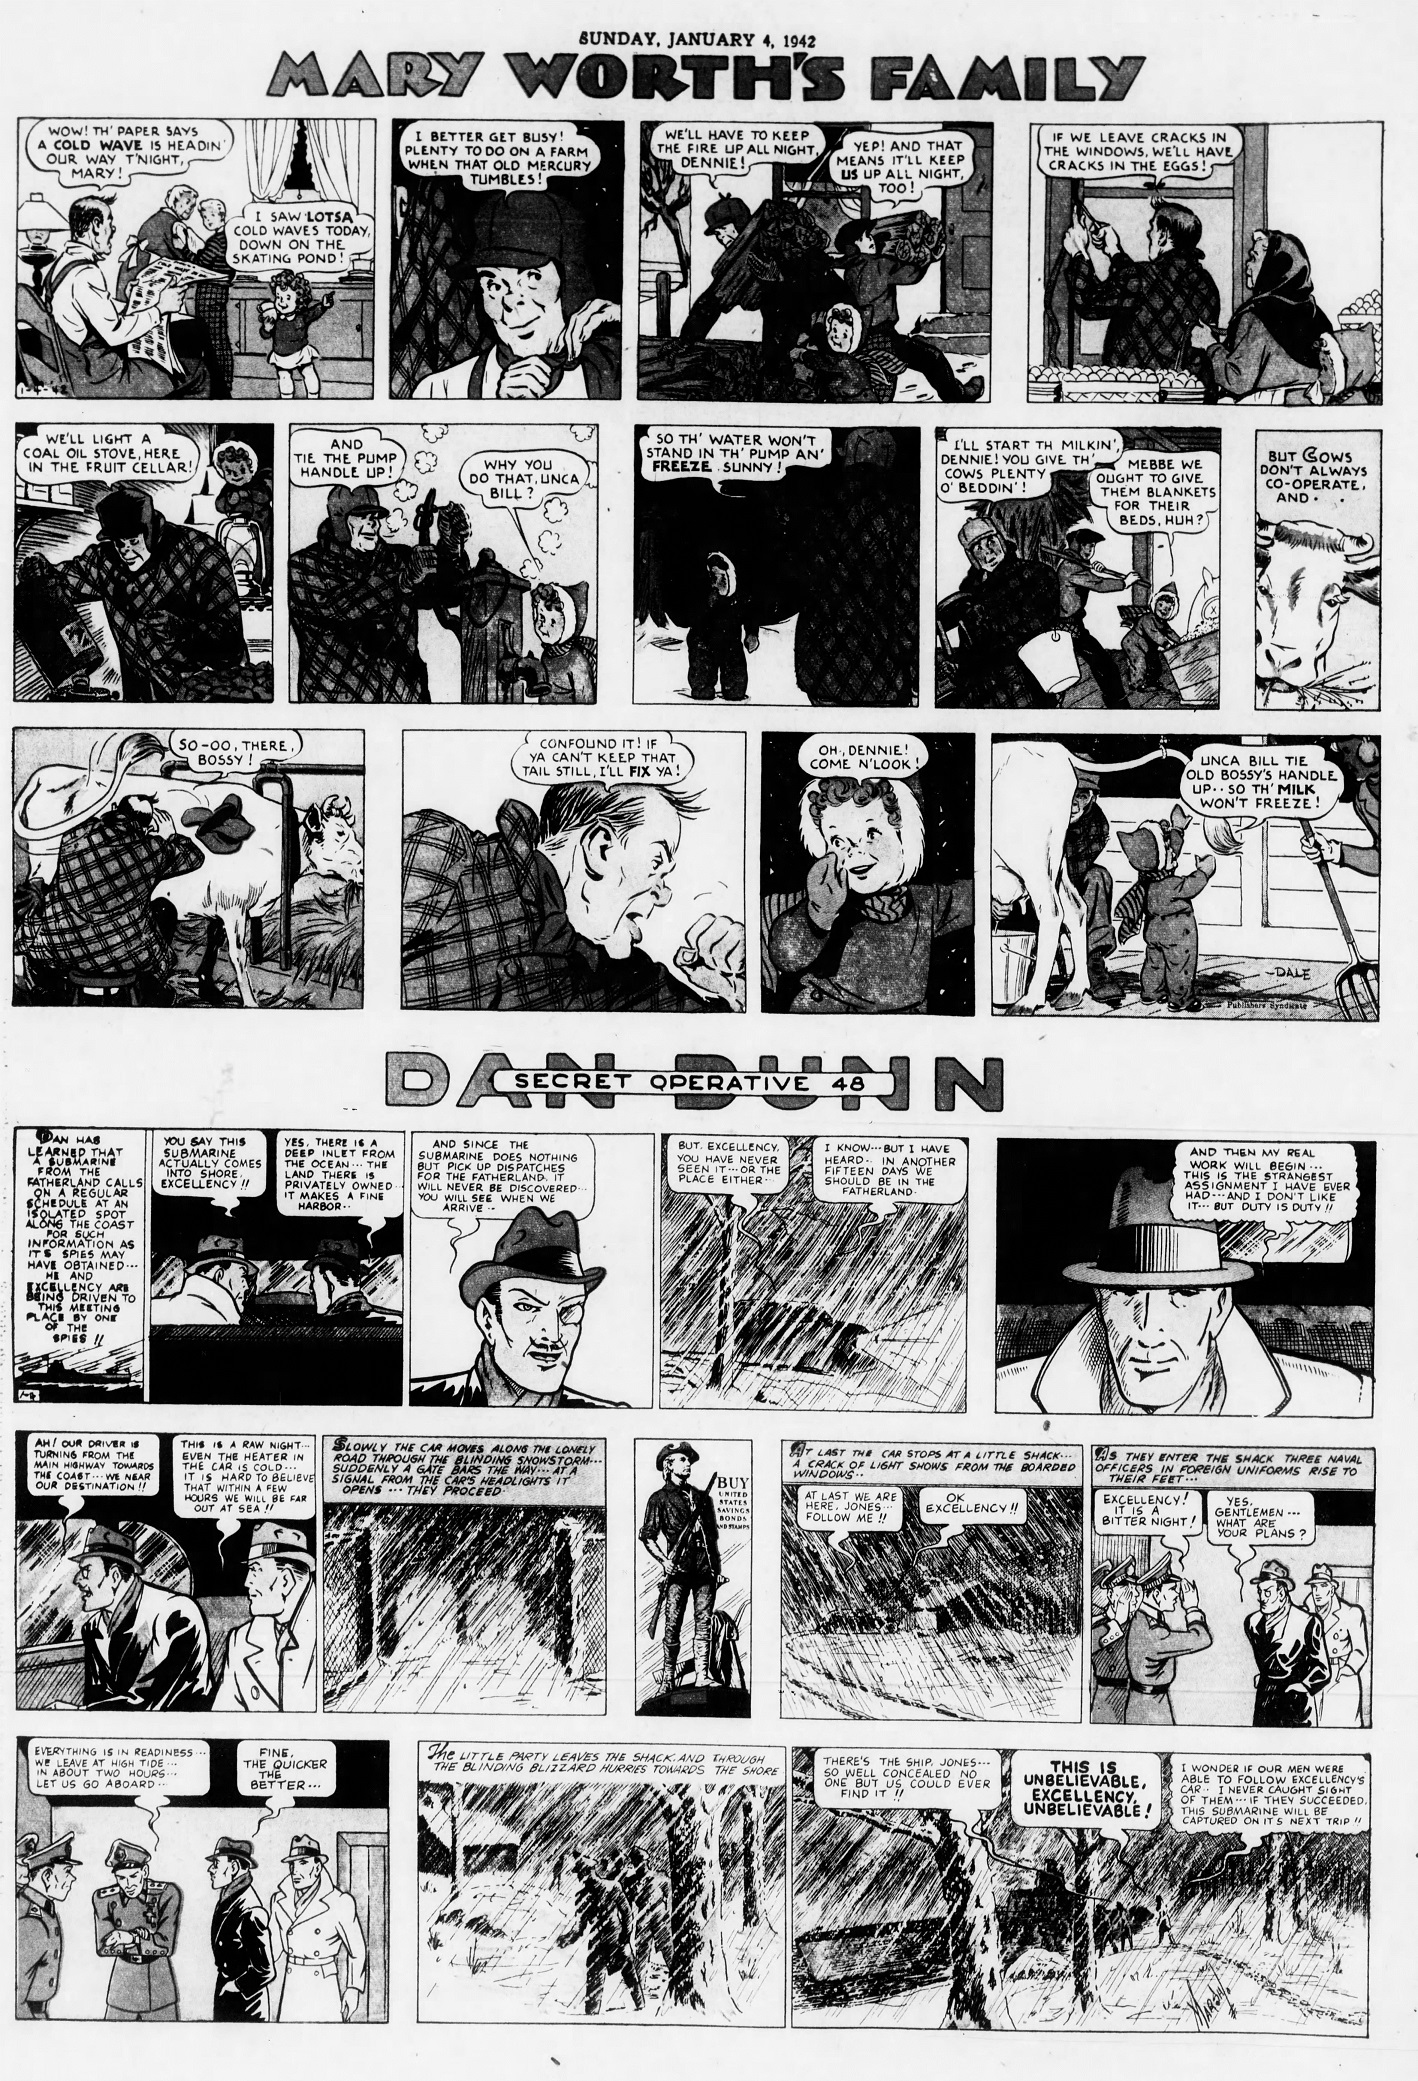 The_Brooklyn_Daily_Eagle_Sun__Jan_4__1942_(7).jpg